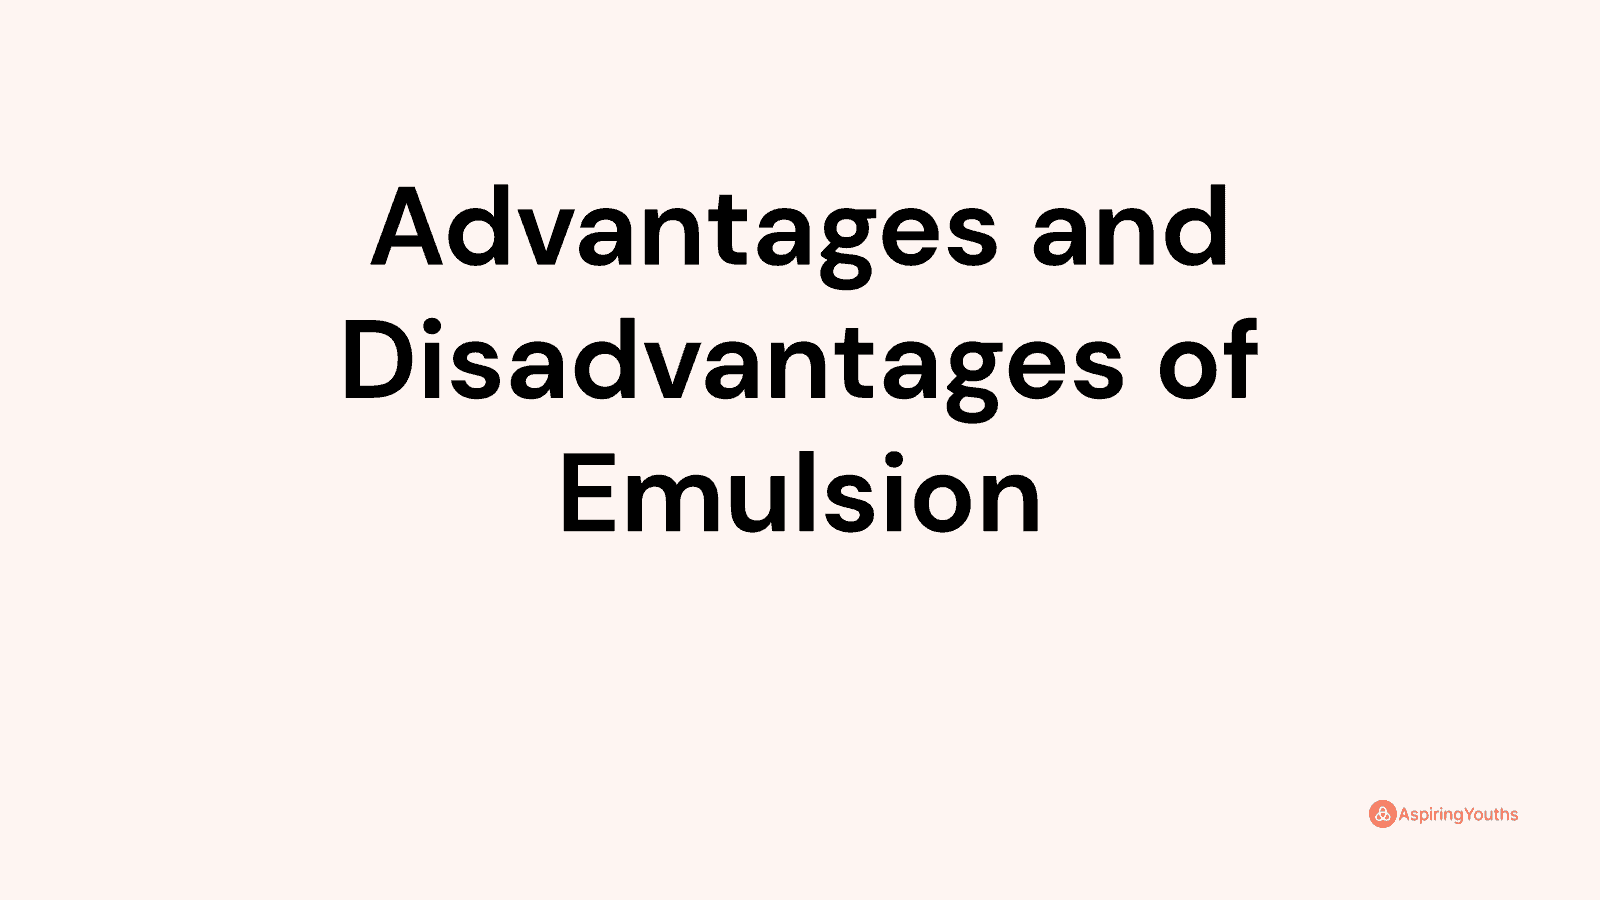 Advantages and disadvantages of Emulsion